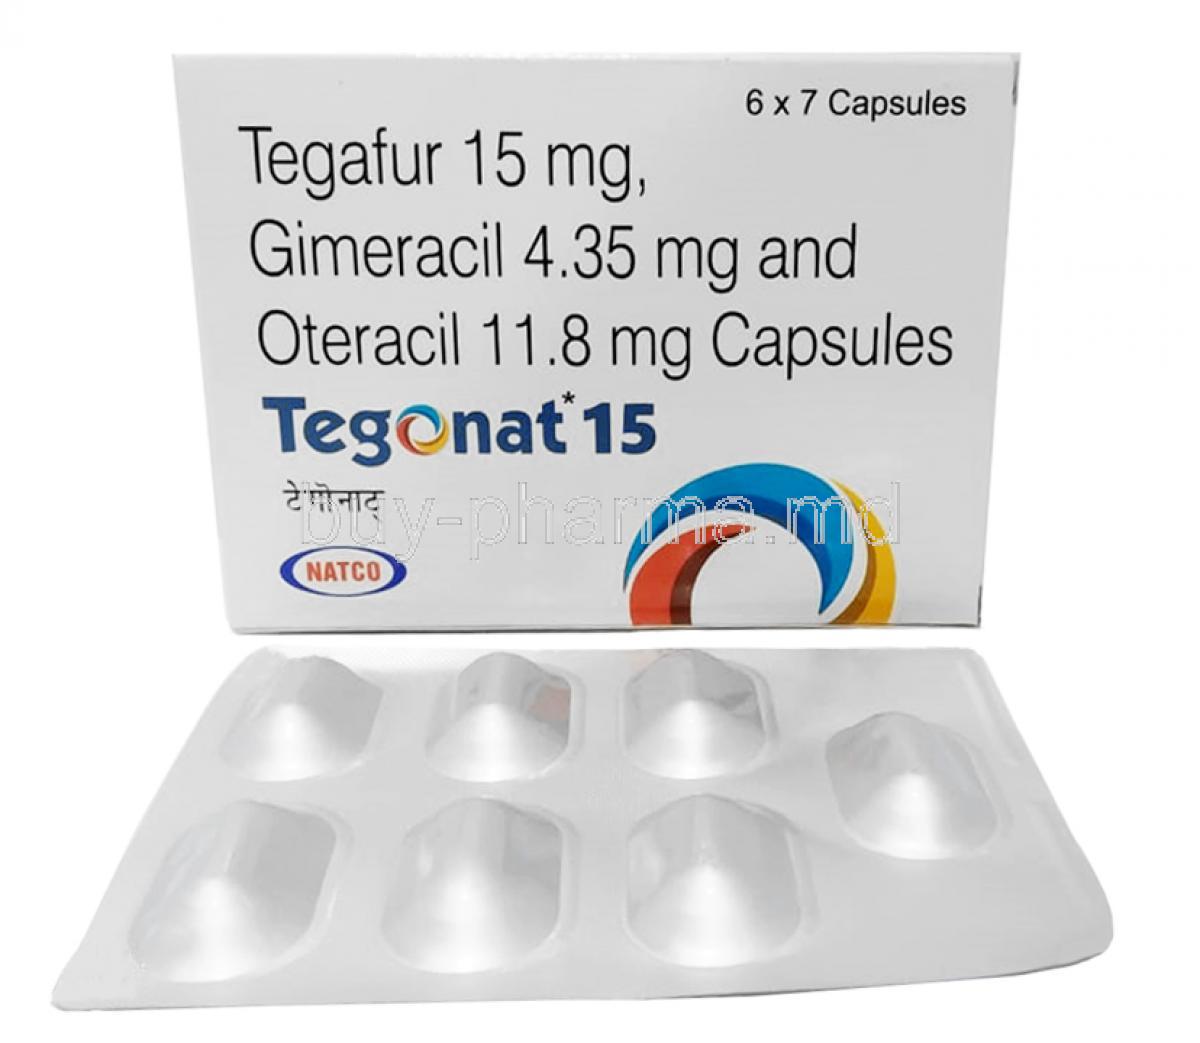 Tegonat,Tegafur 15mg, Gimeracil 4.35mg, Oteracil 11.8mg, 7 capsules, Natco Pharma, Box, Blisterpack